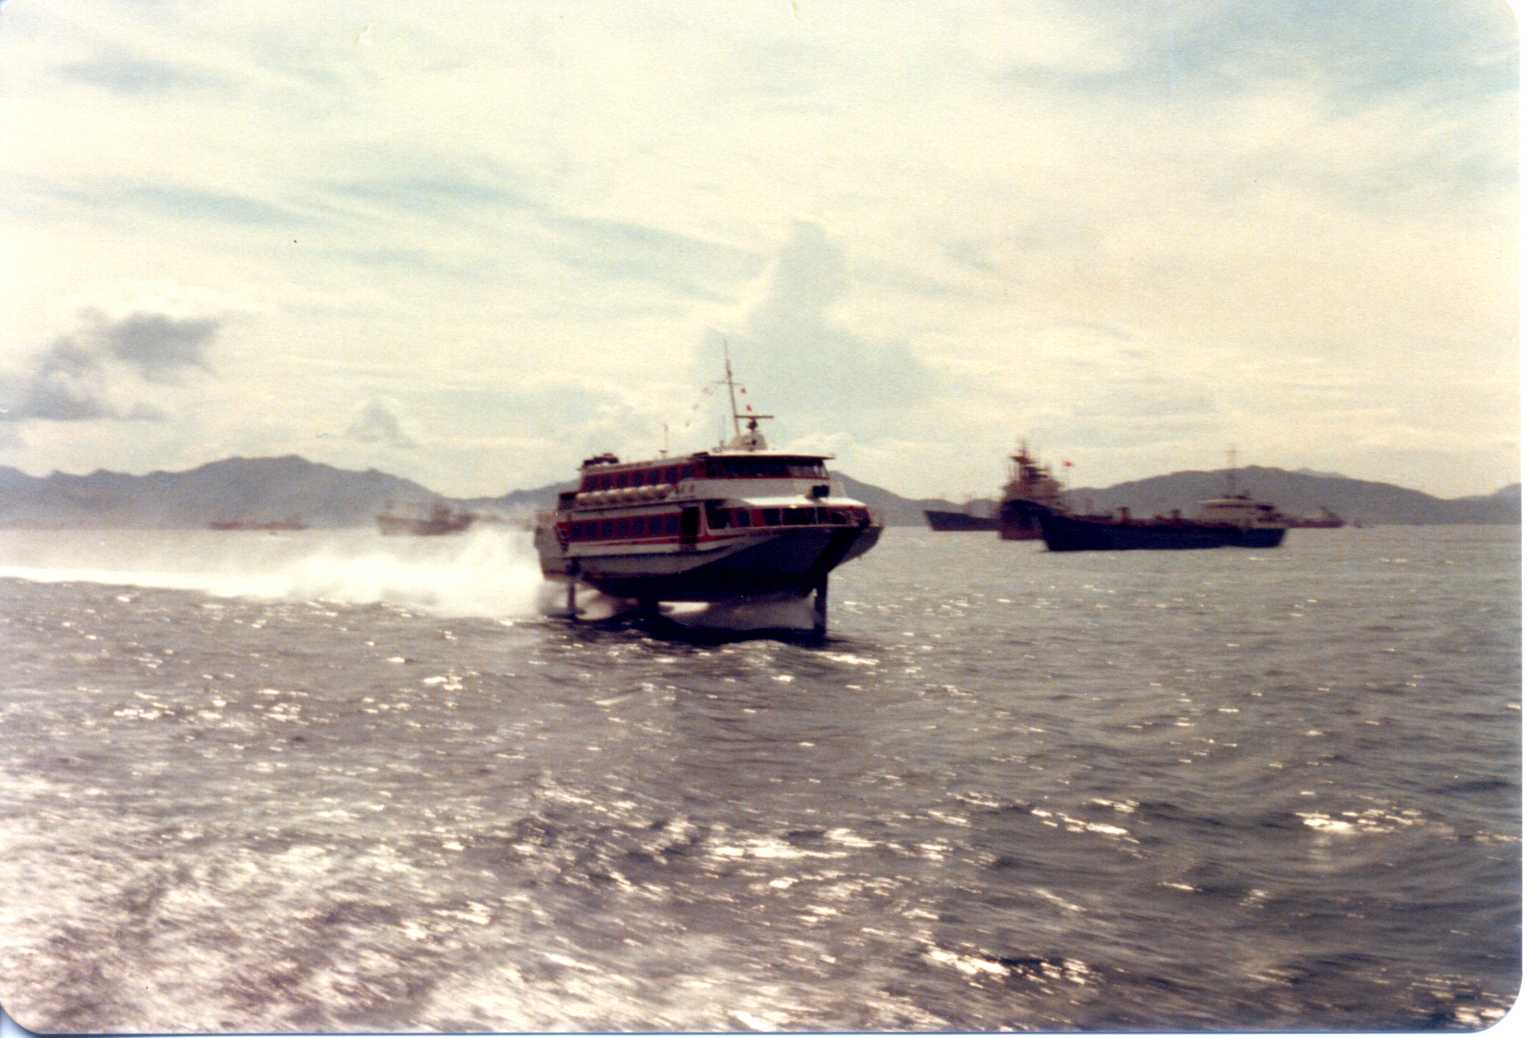 img 1980 Hong Kong Macau jetfoil return journey (we were in cockpit with pilot) 487